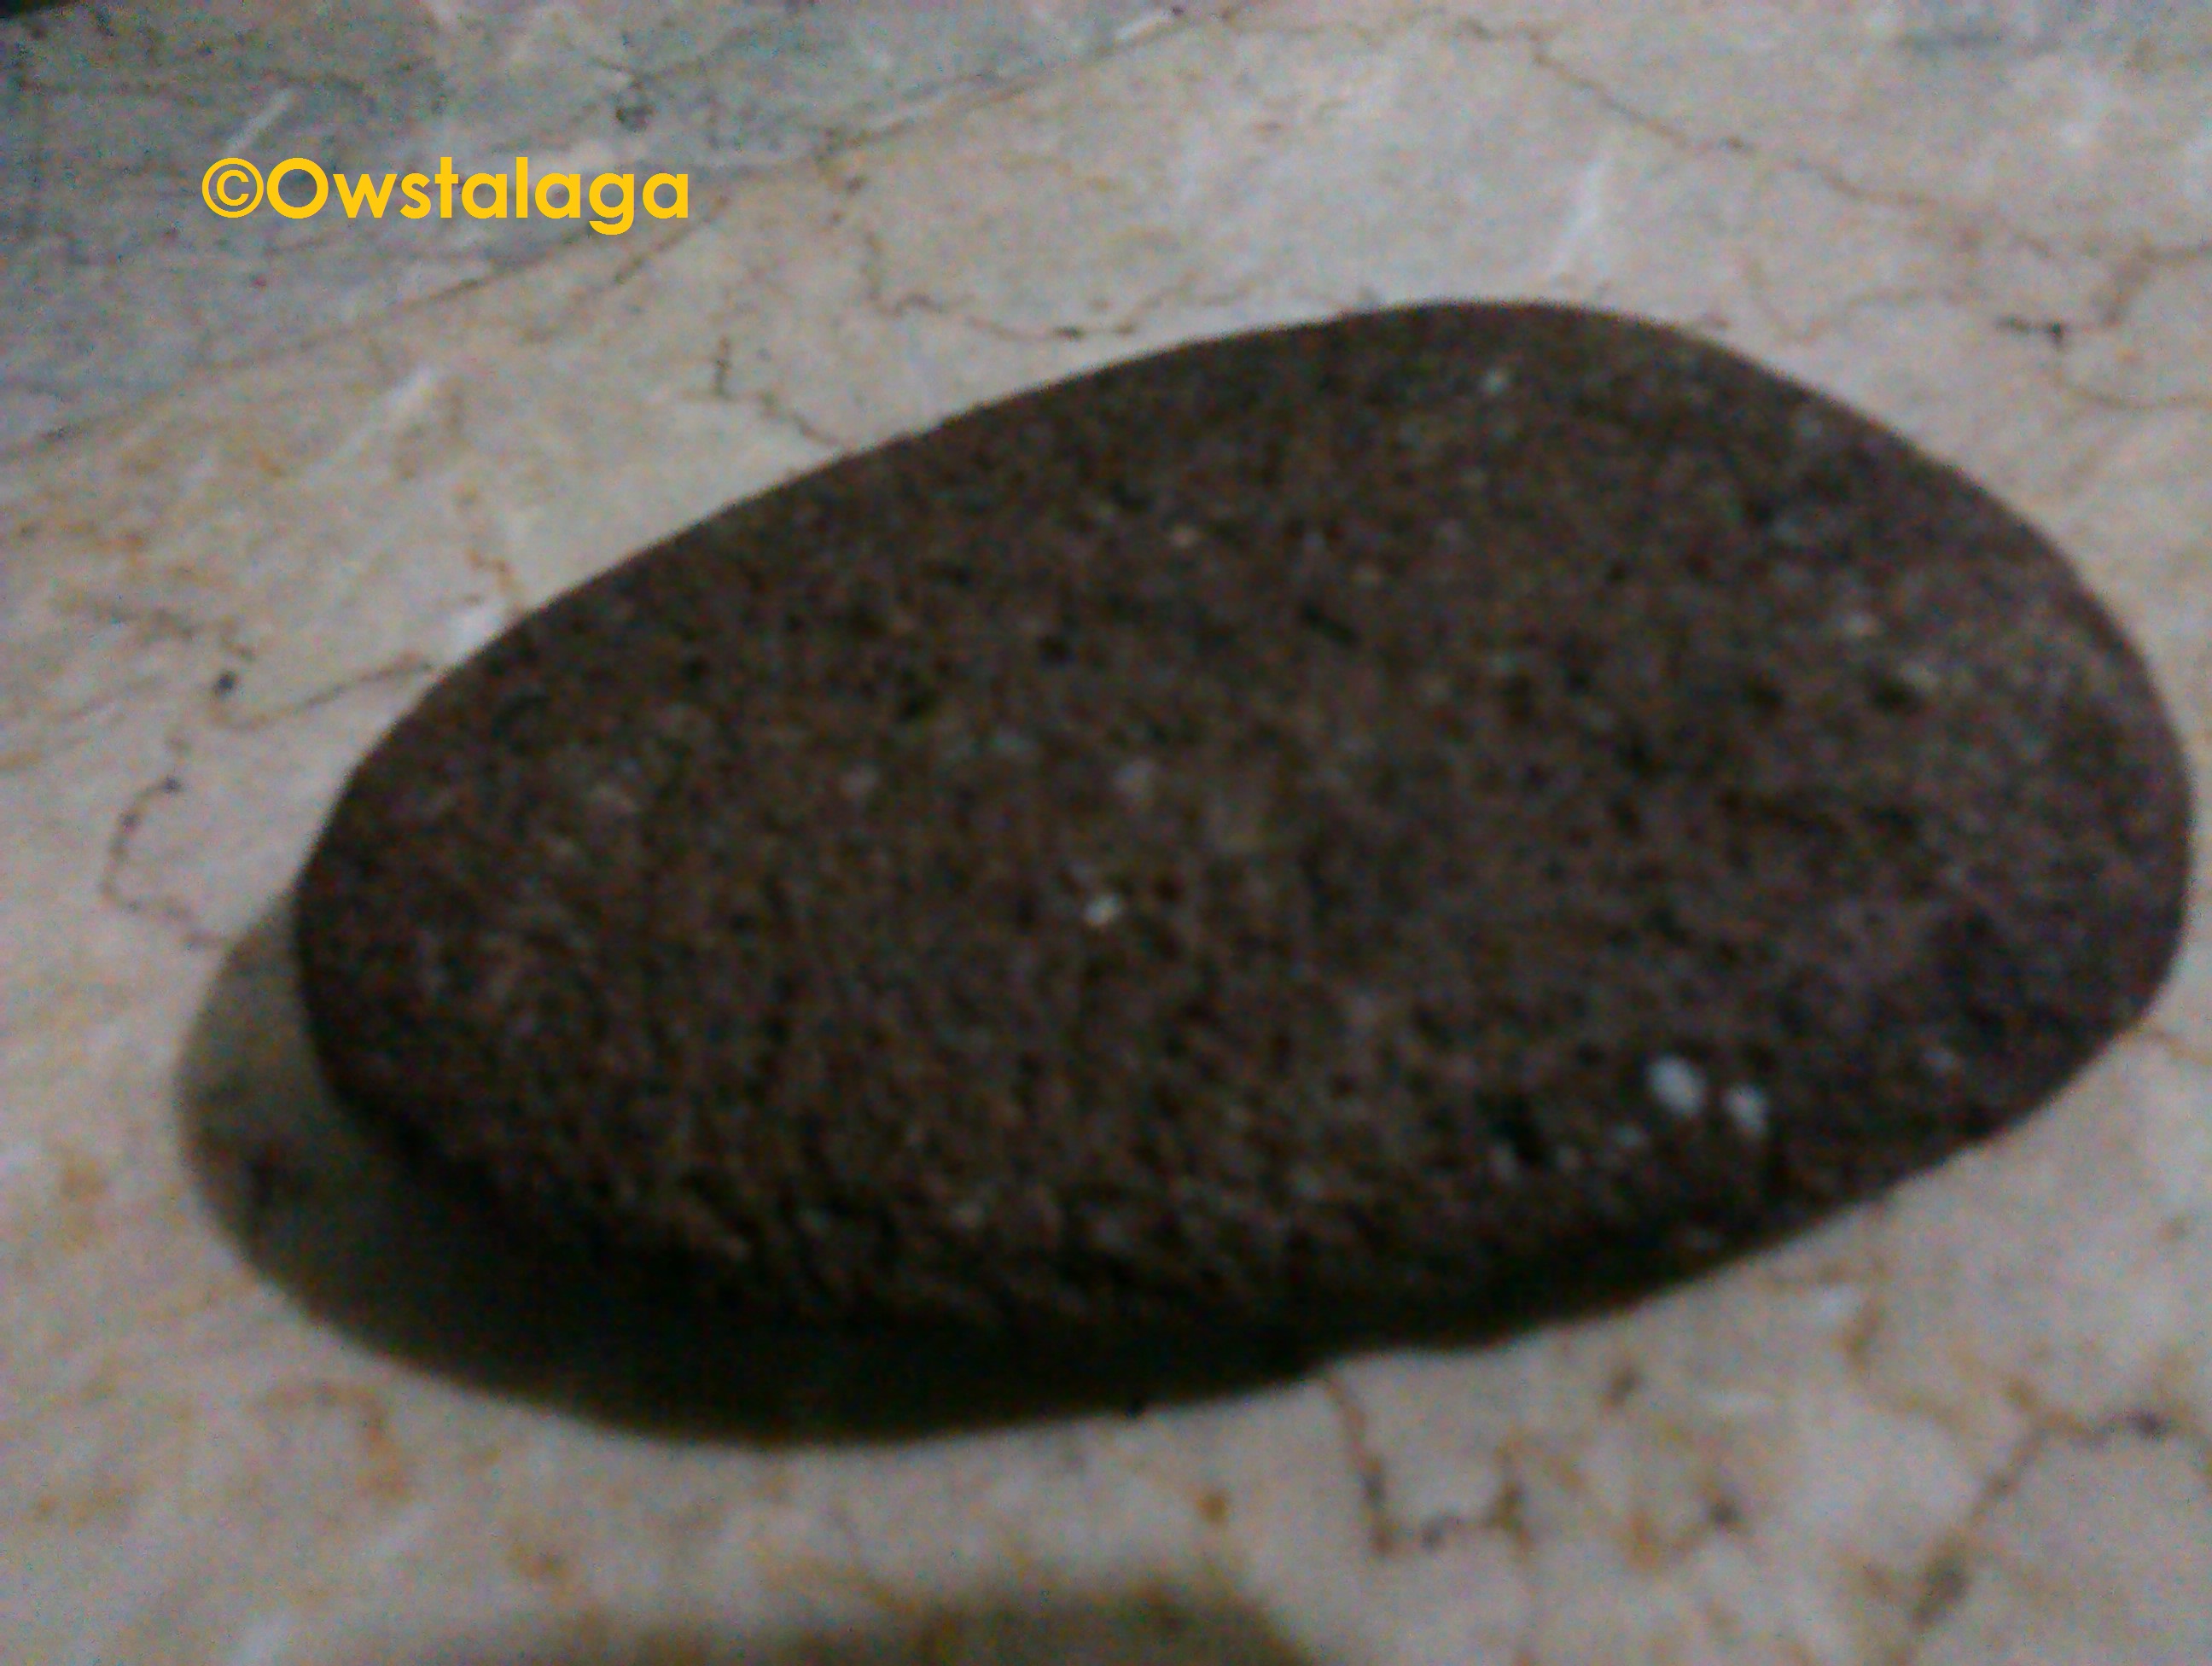 My bath stone. :D